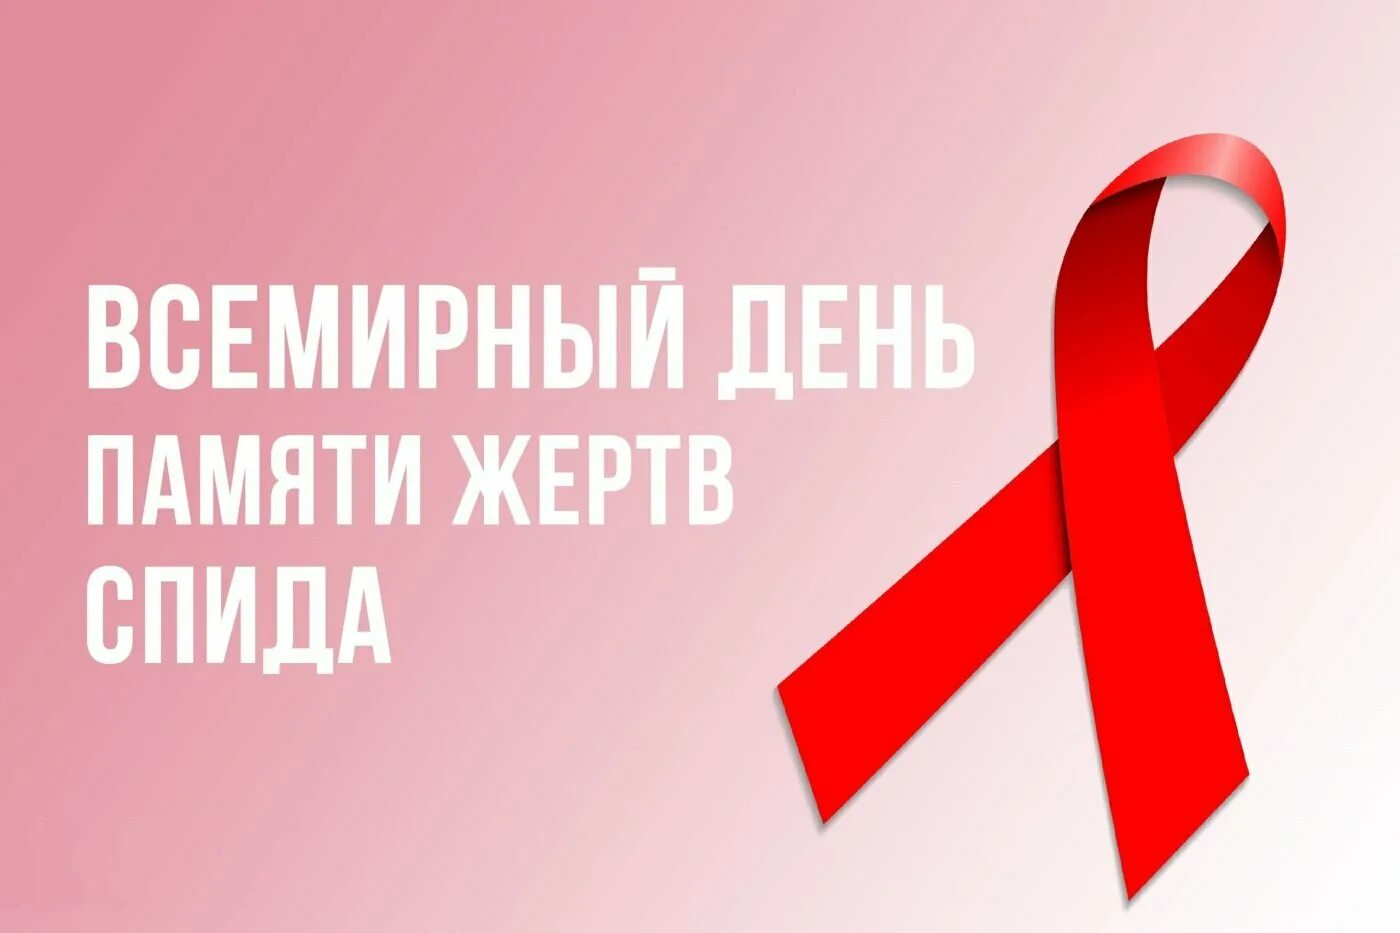 День памяти жертв СПИДА. День памяти жертв СПИДА 2022. Всемирный день память жерт СПИДА. Всемирный день СПИДА 2022. День памяти спид